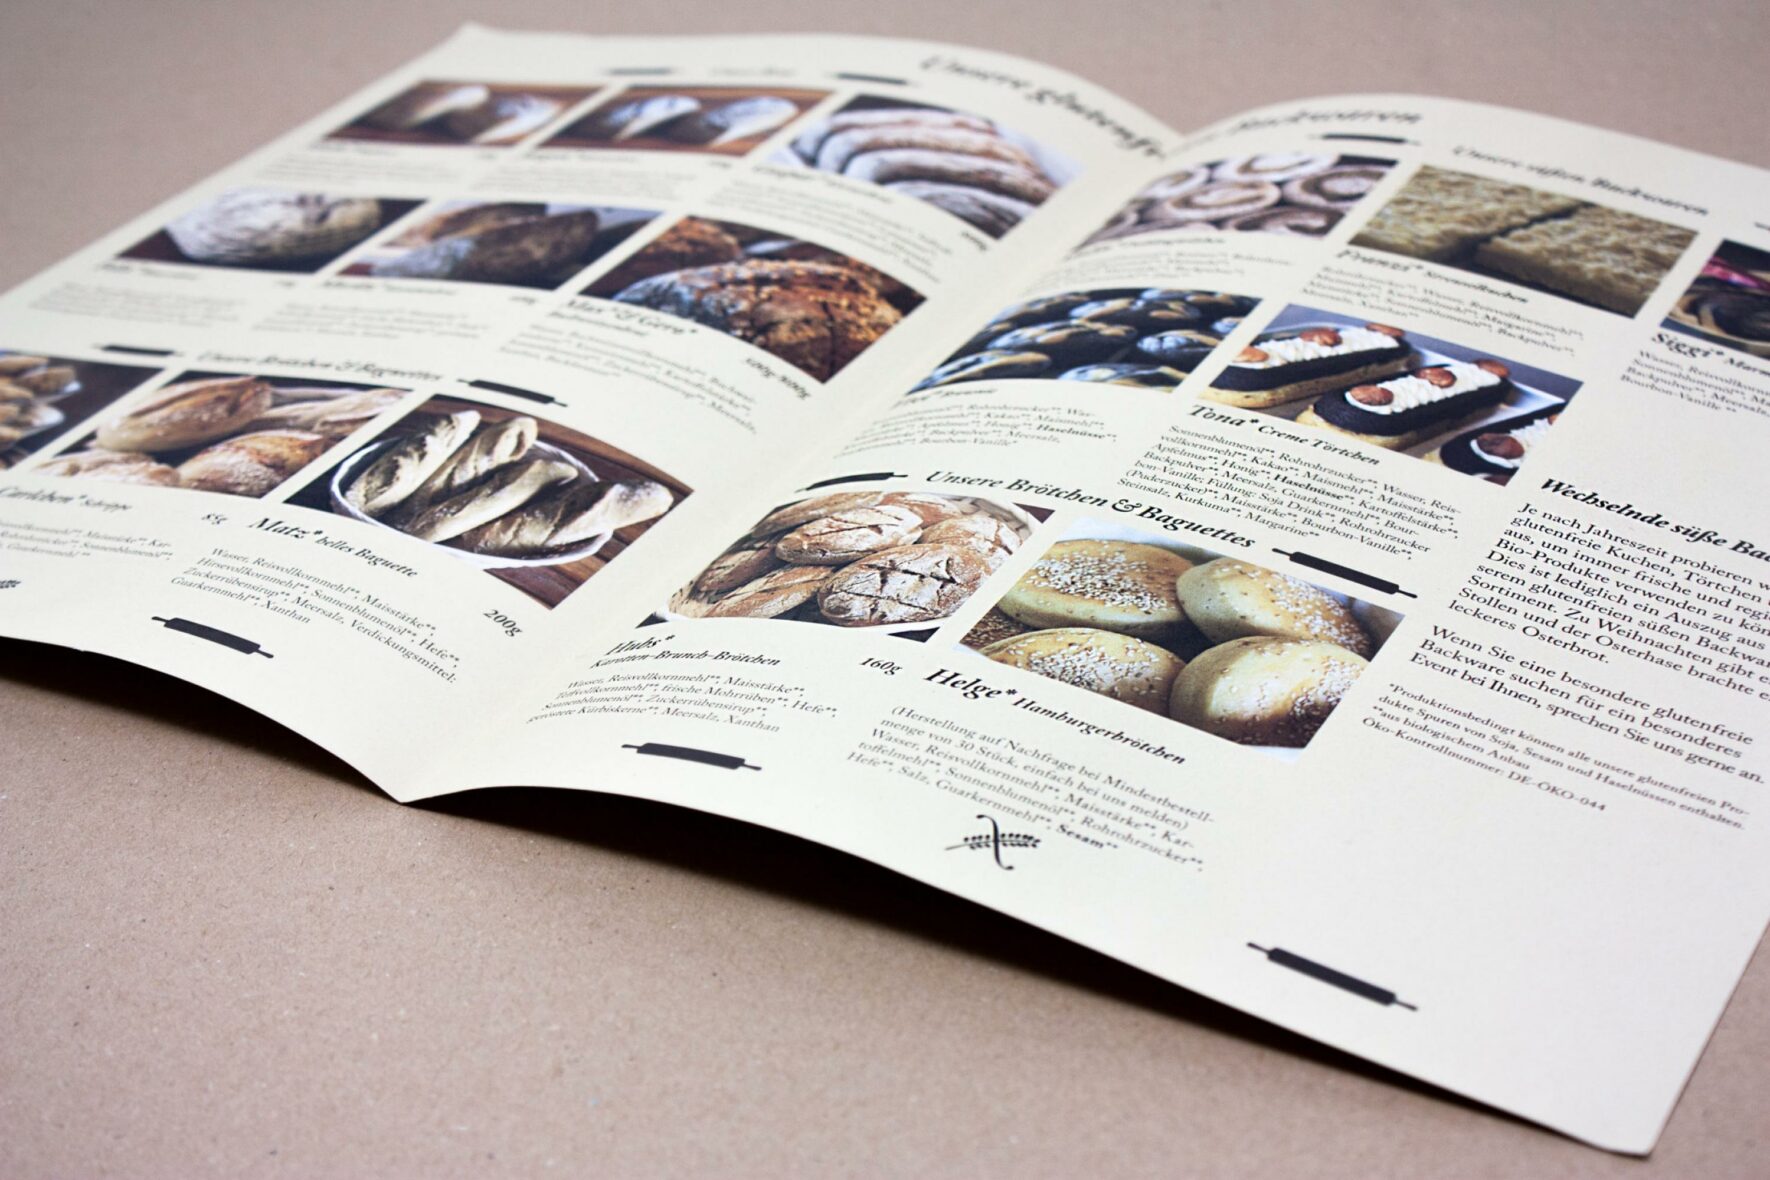 Print-broschuere-jute-baeckerei-formlos-corporate-design-4